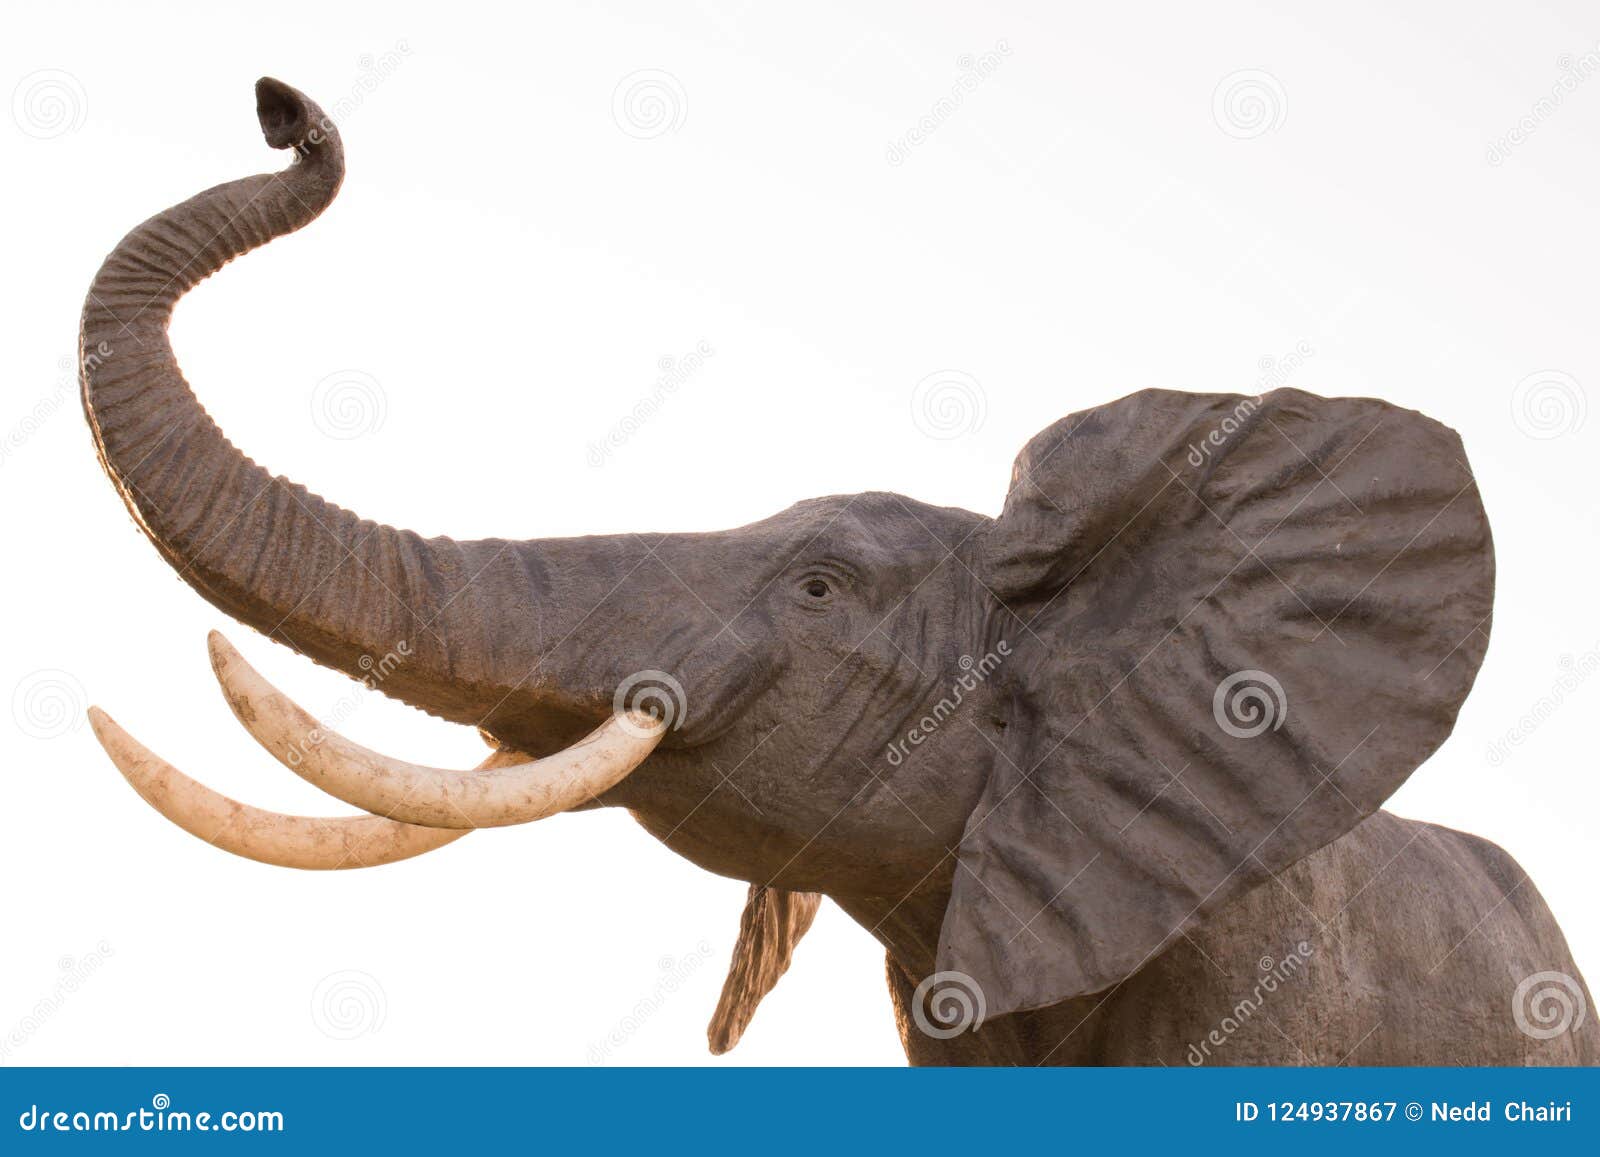 elephant elefante trompa trunk giant